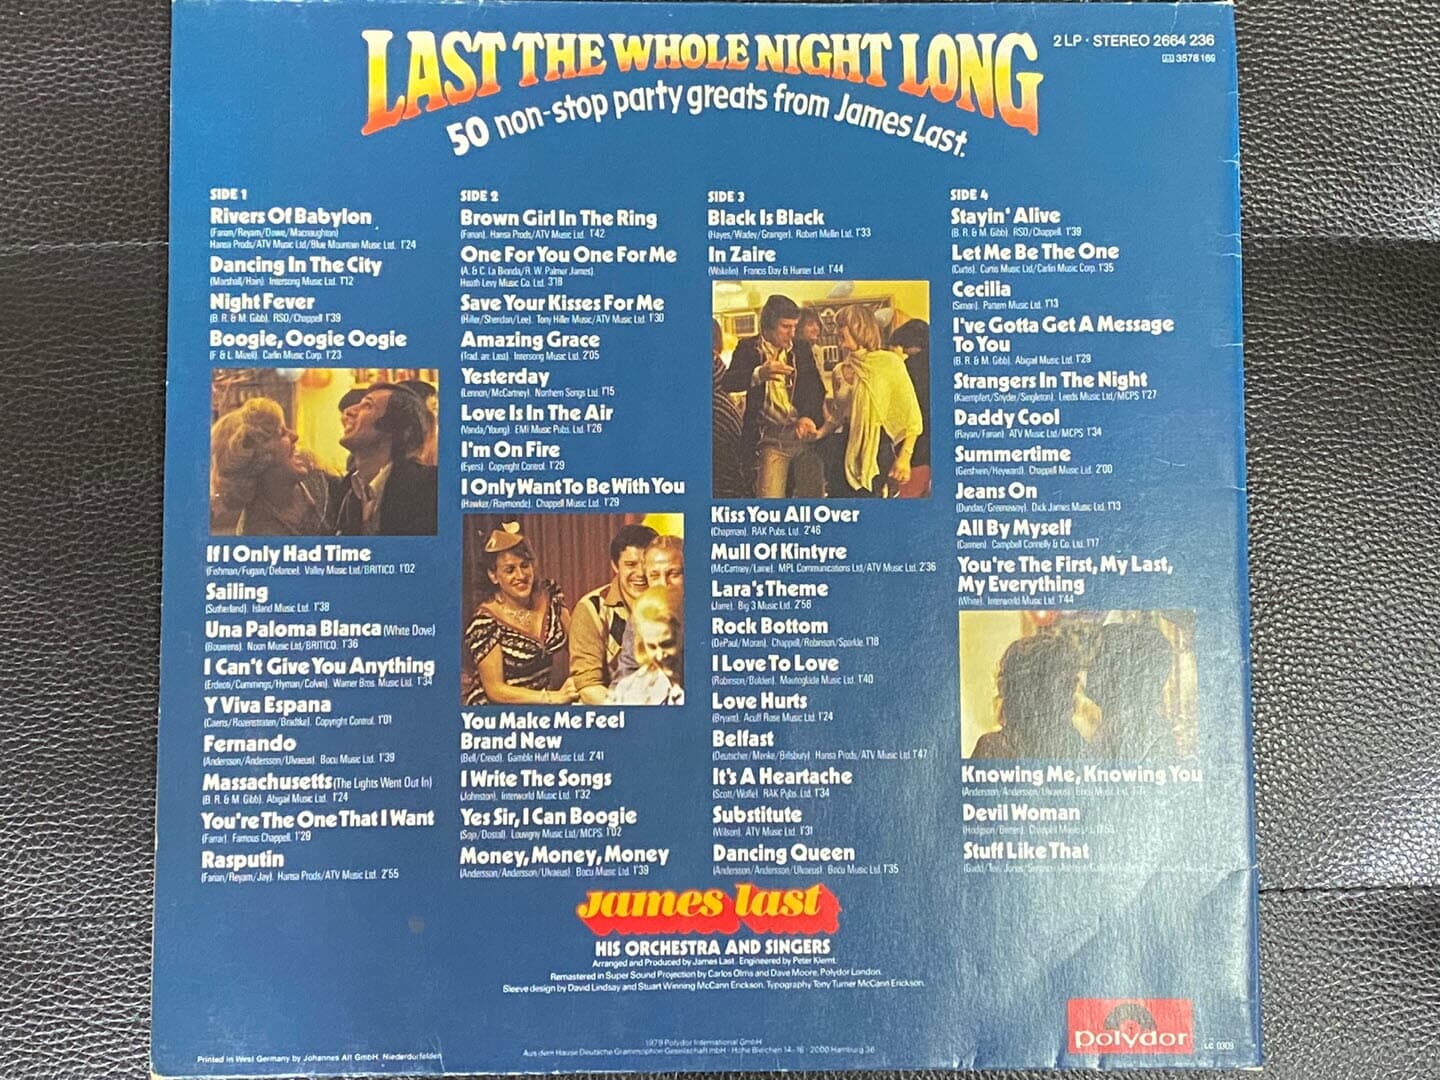 [LP] 제임스 라스트 - James Last - The Whole Night Long 2Lps [독일반]